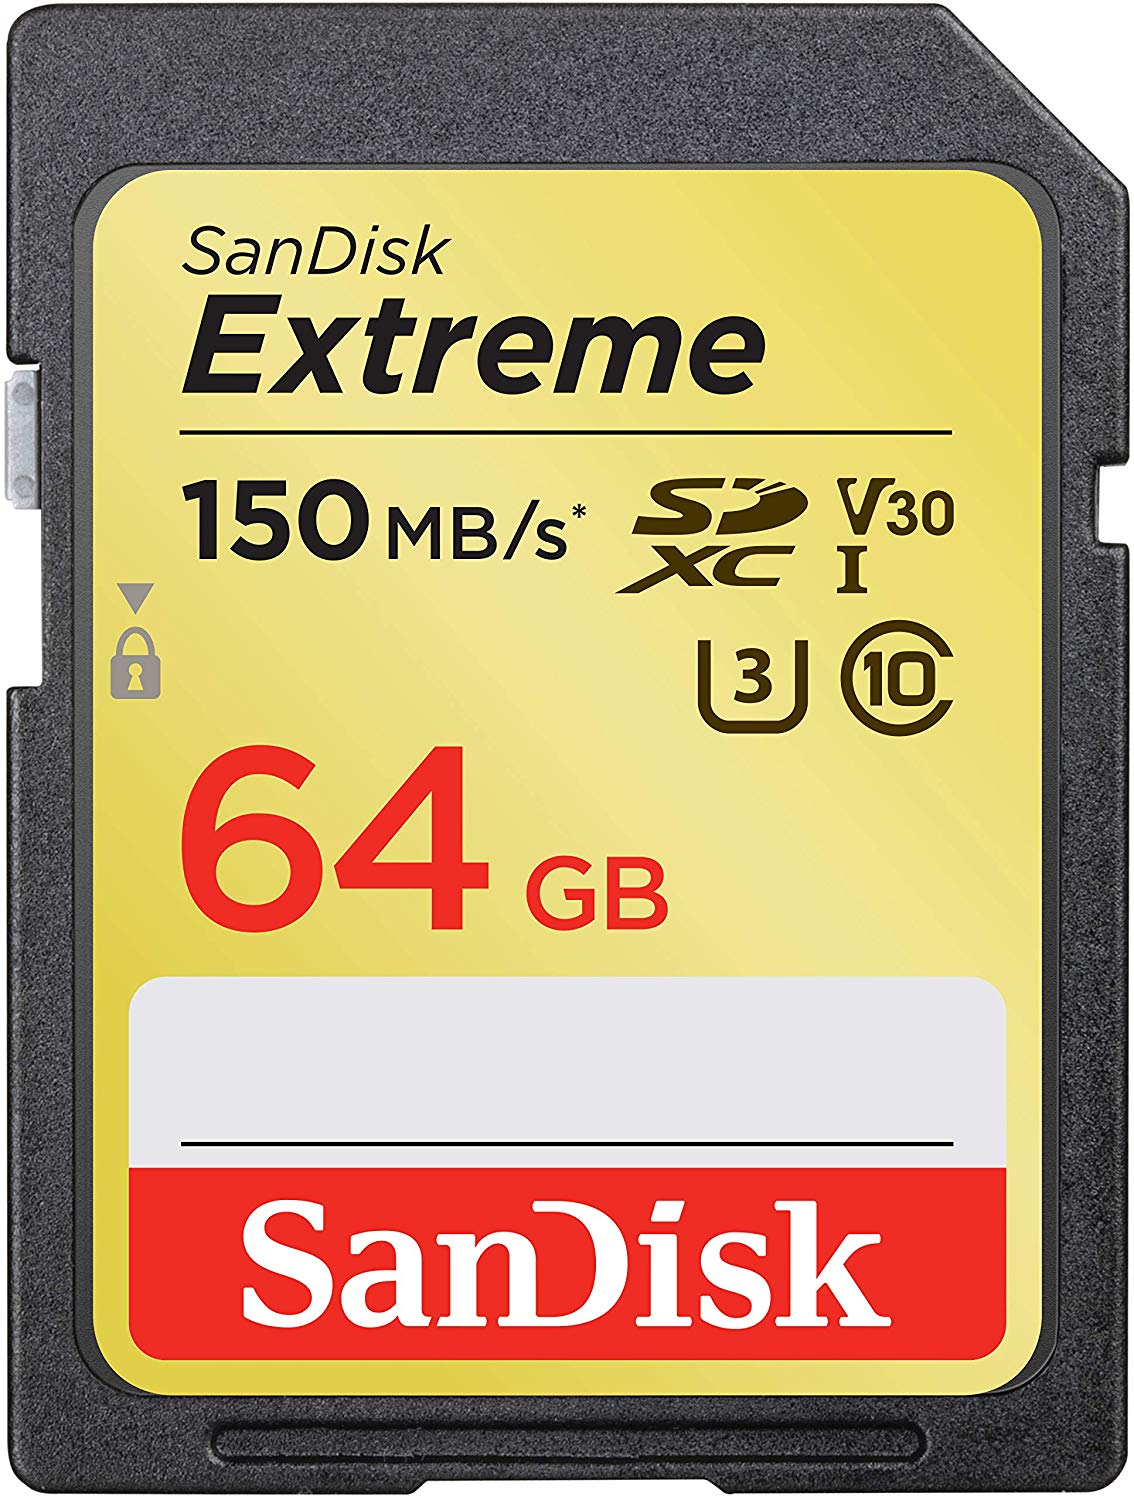 Konijn rukken leerling Sandisk SDXC geheugenkaart - 64GB - Extreme - U3 | Saake-shop.nl